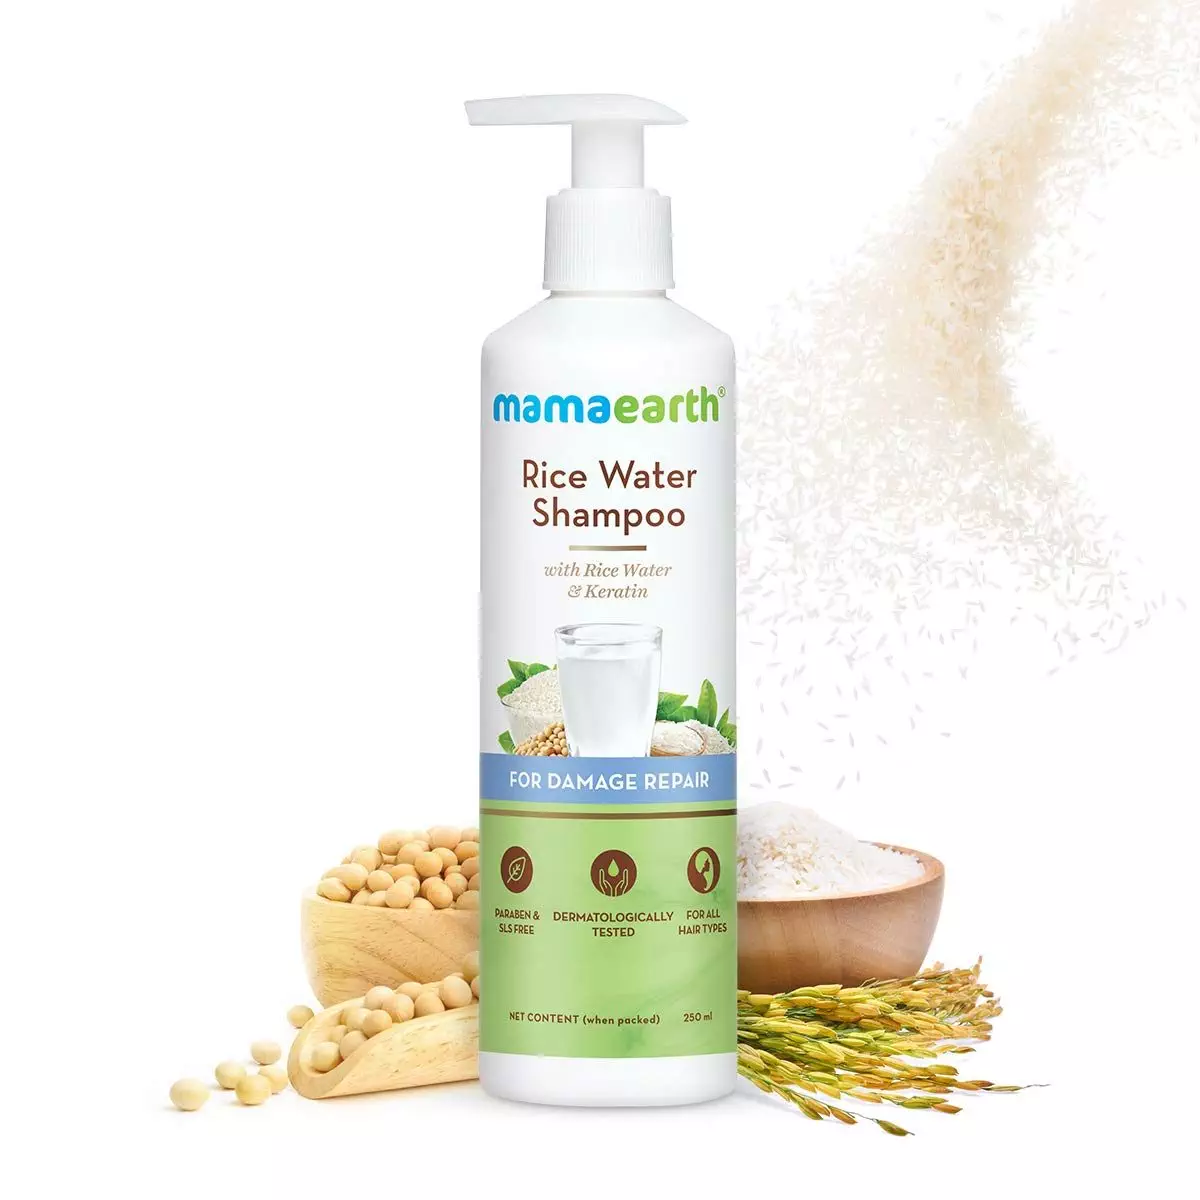 Mamaearth Rice Water Shampoo Review 10